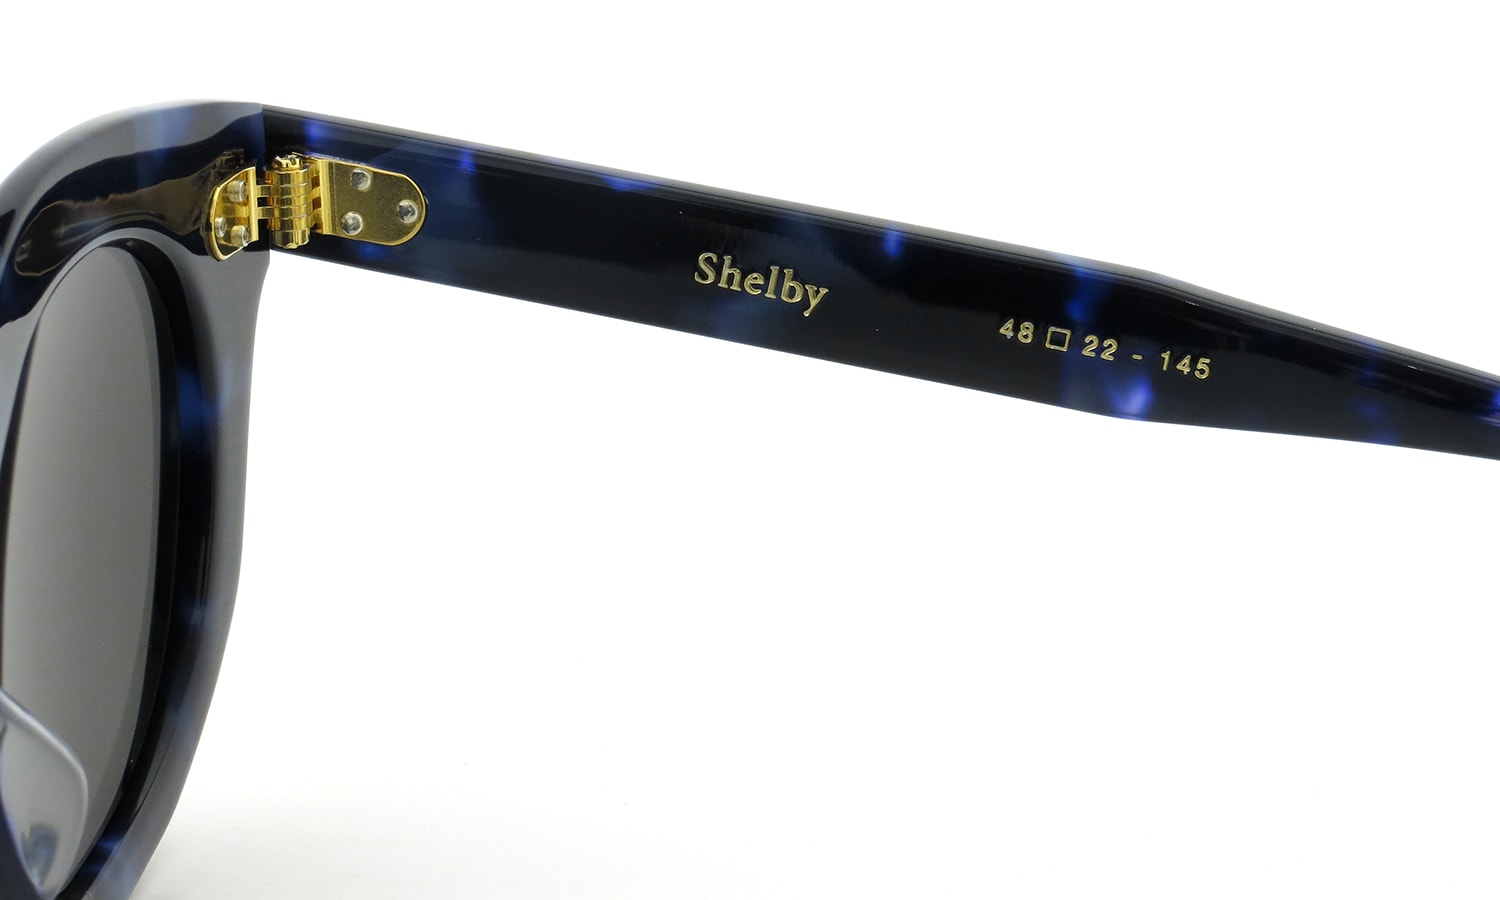 MAX PITTION サングラス Shelby 48size Blu.Trt.